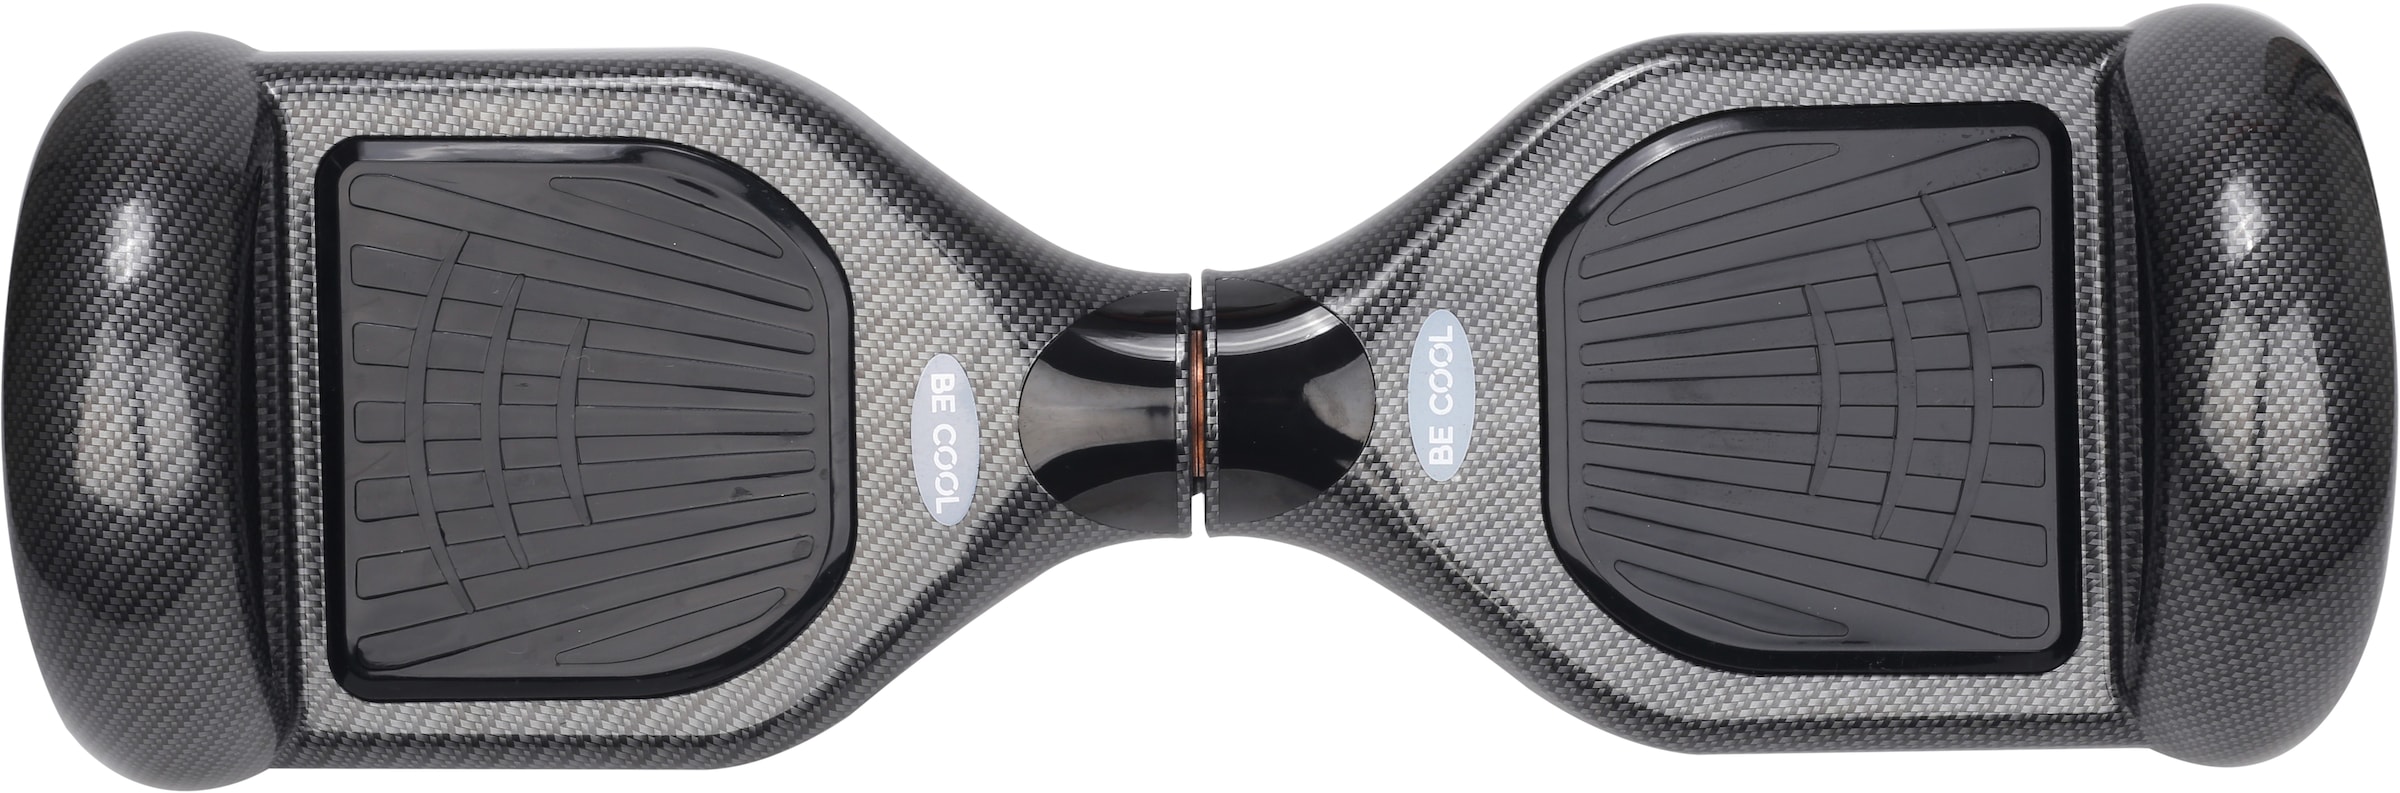 be cool Balance Scooter »6,5“ Carbon inkl. Rucksack und Sound-Dot«, 12 km/h, 10 km